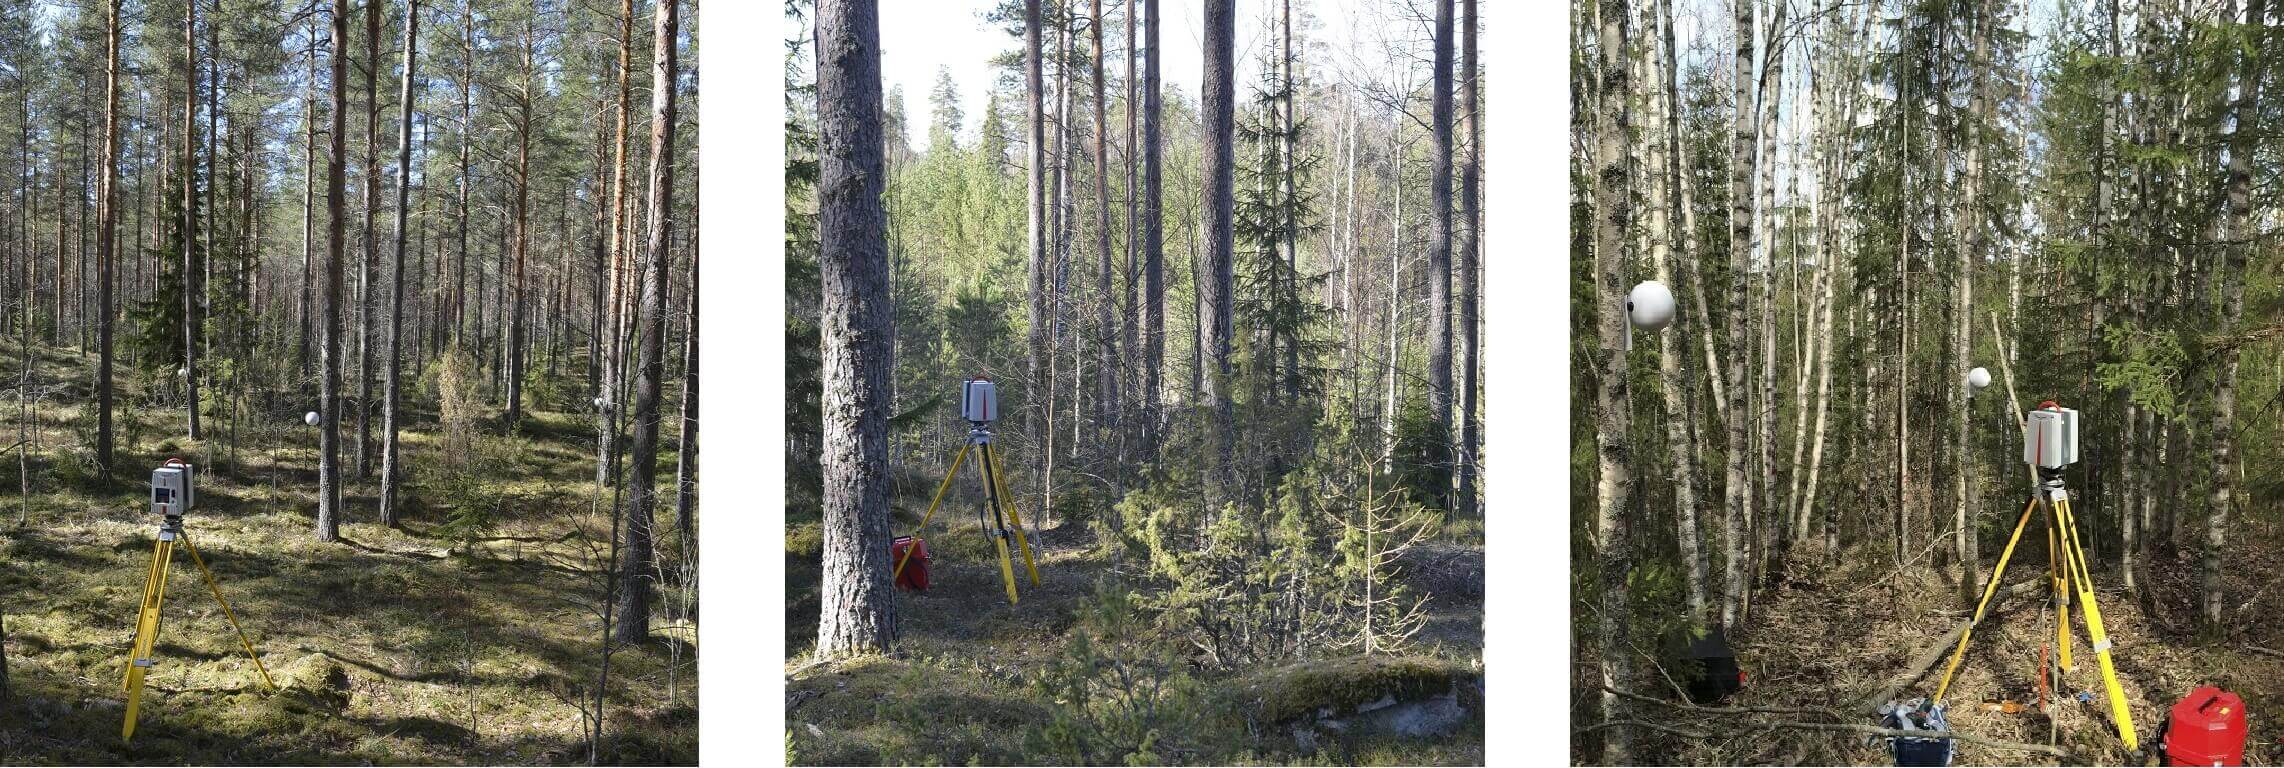 Terrestrial laser scanning equipment in a forest